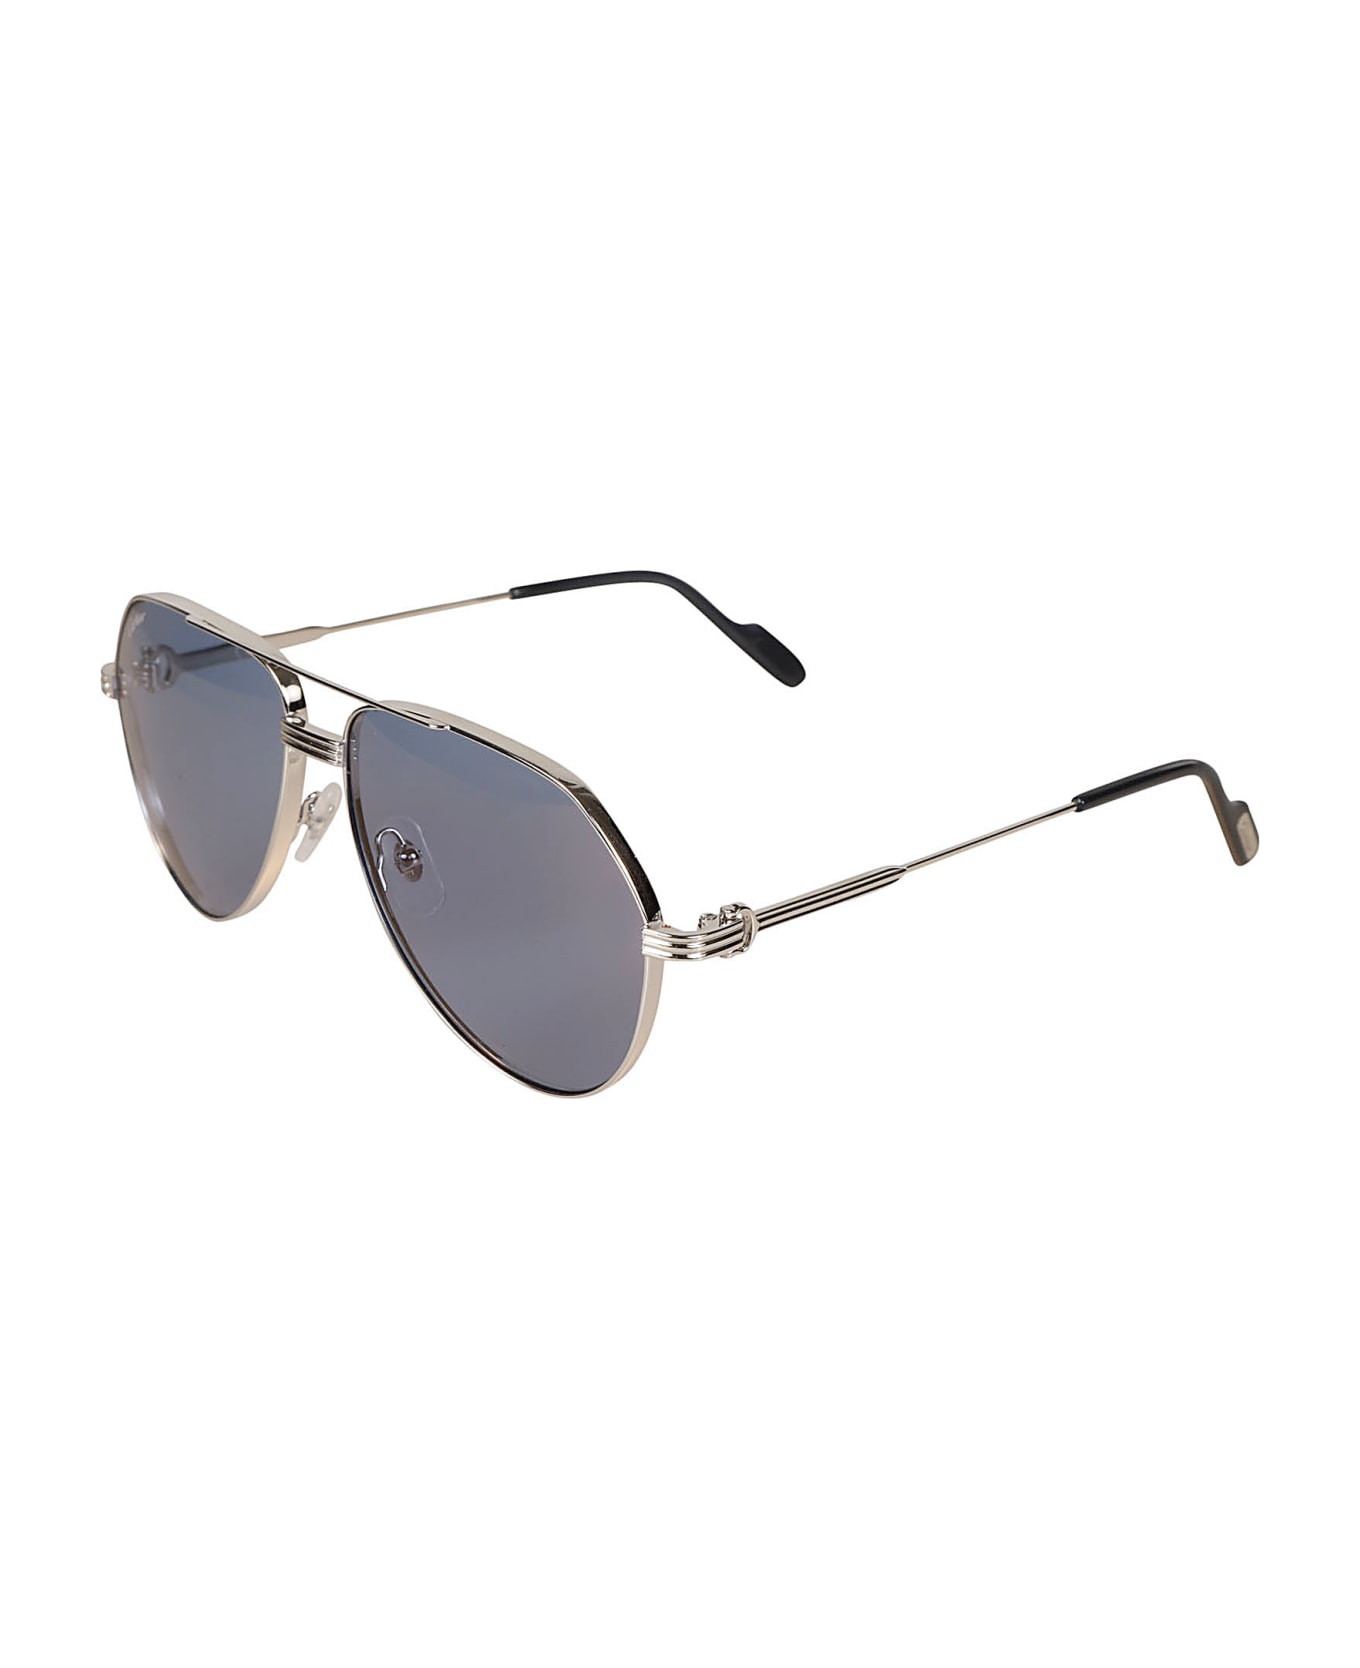 Cartier Eyewear Aviator Classic Sunglasses Sunglasses - silver サングラス